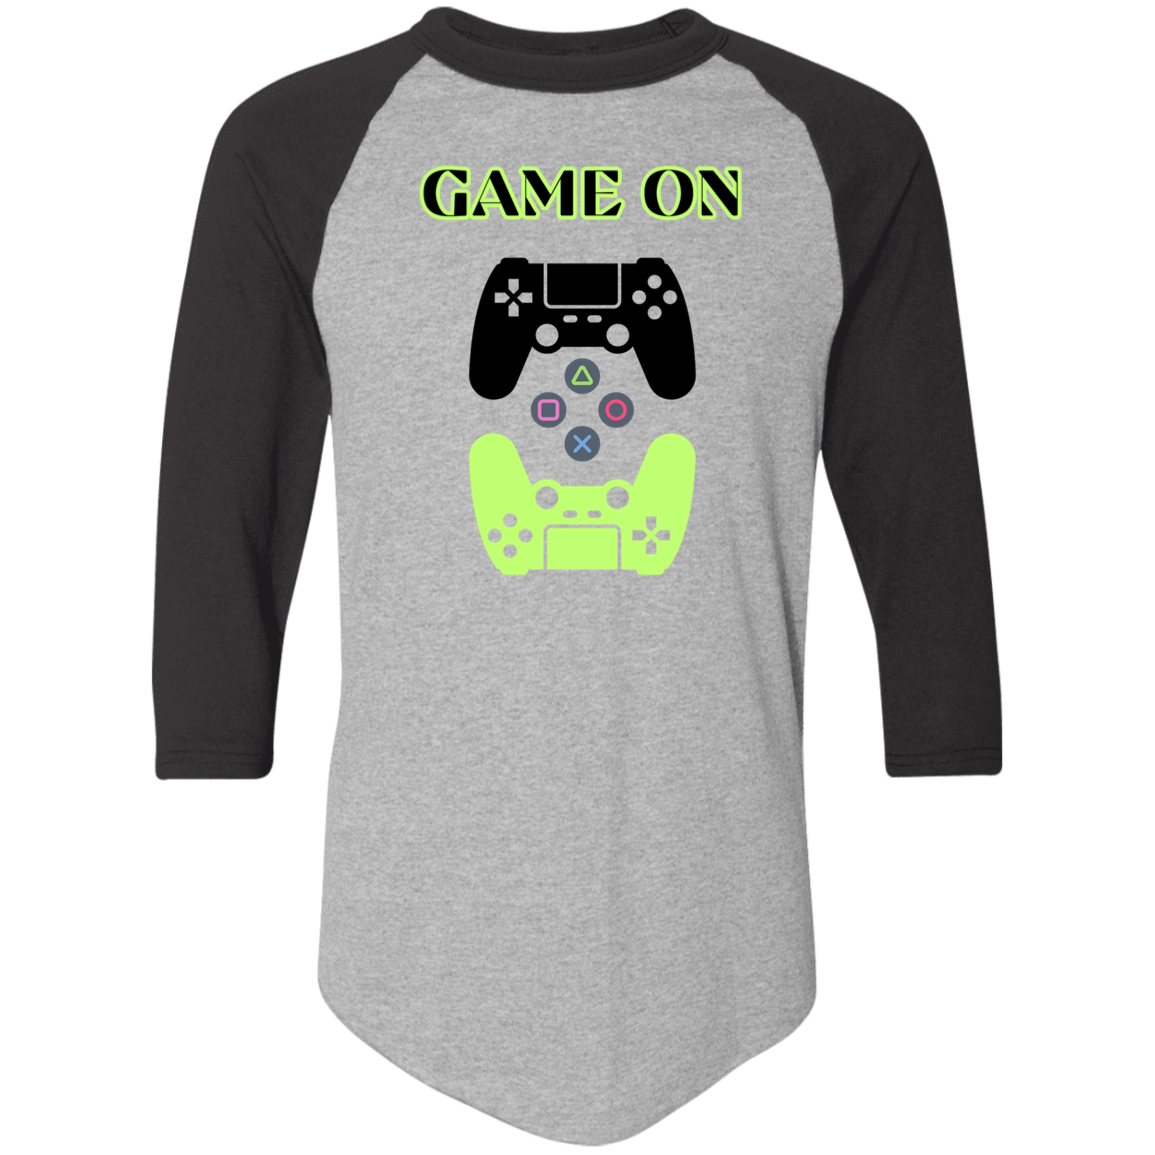 Game On - Camiseta raglán con bloques de colores para hombre